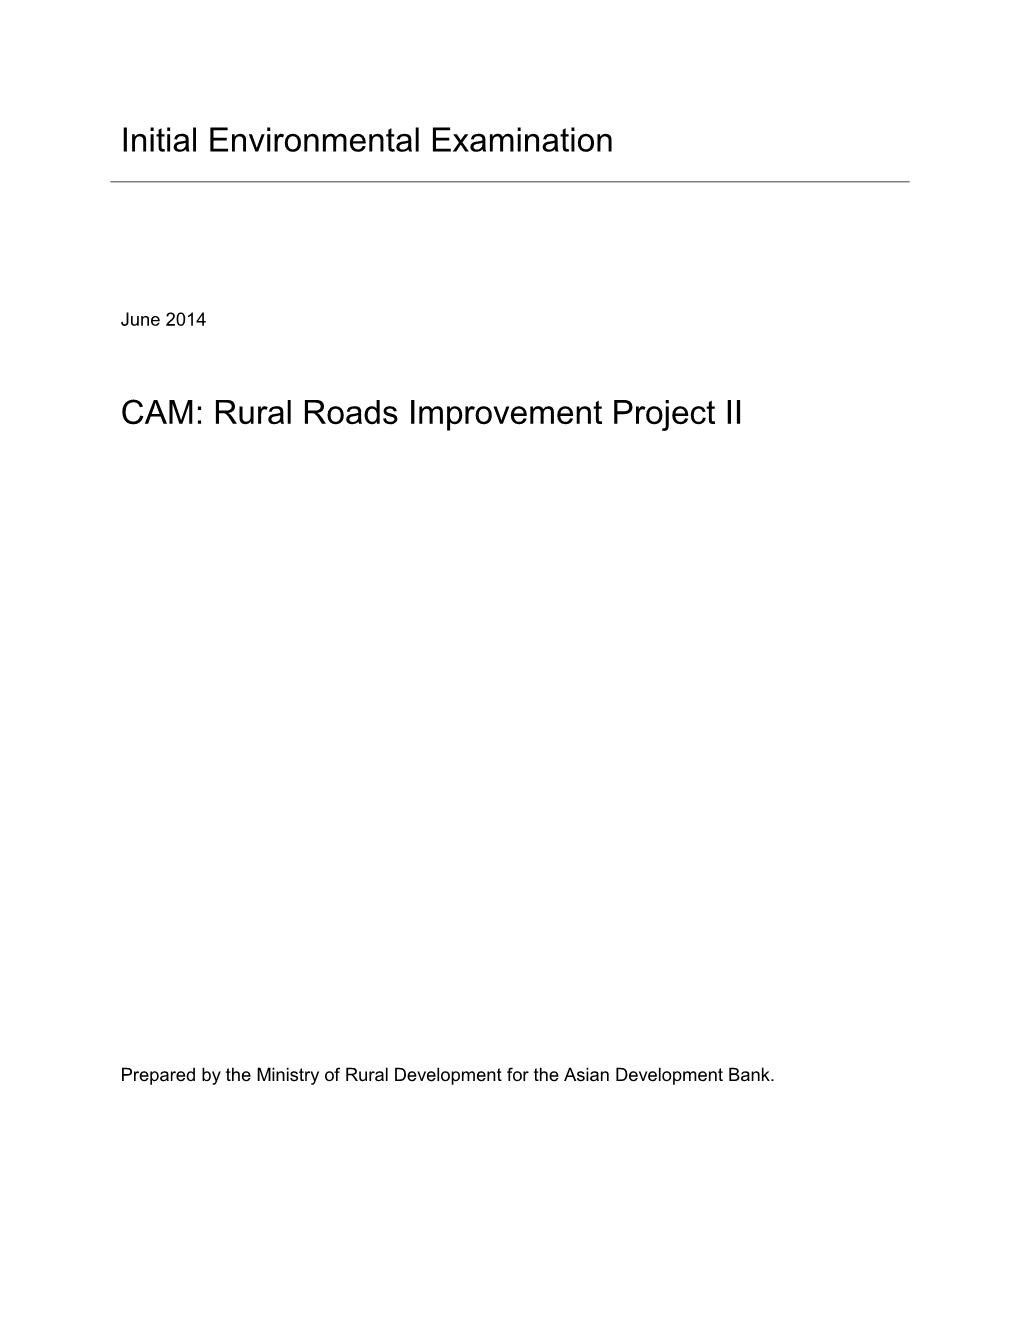 42334-014: Rural Roads Improvement Project